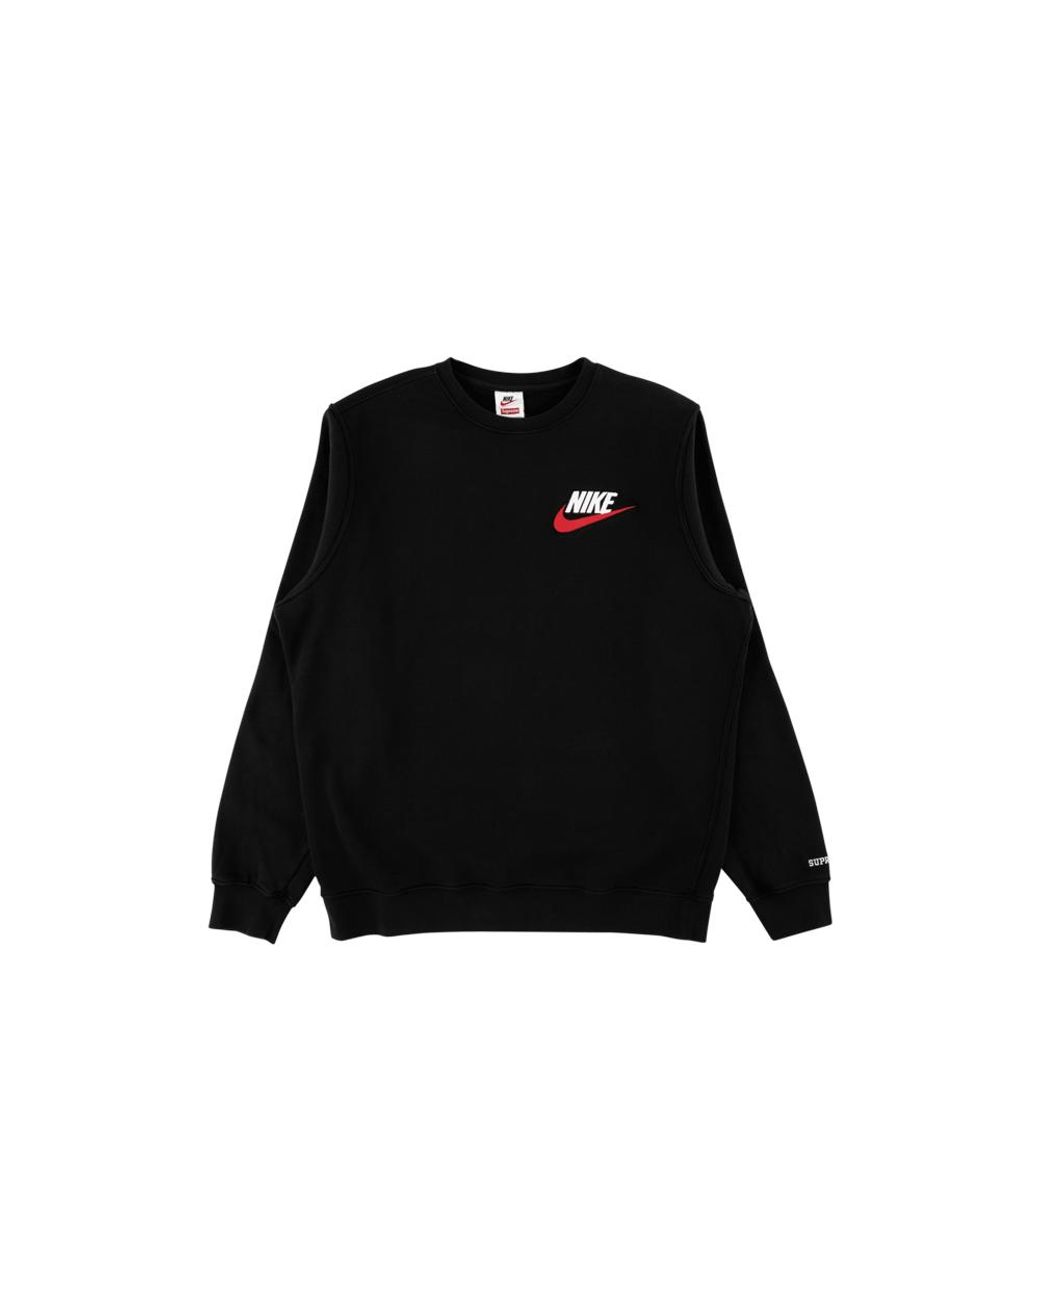 Supreme Nike Crewneck T-shirt 'fw 18' in Black for Men - Save 54% - Lyst